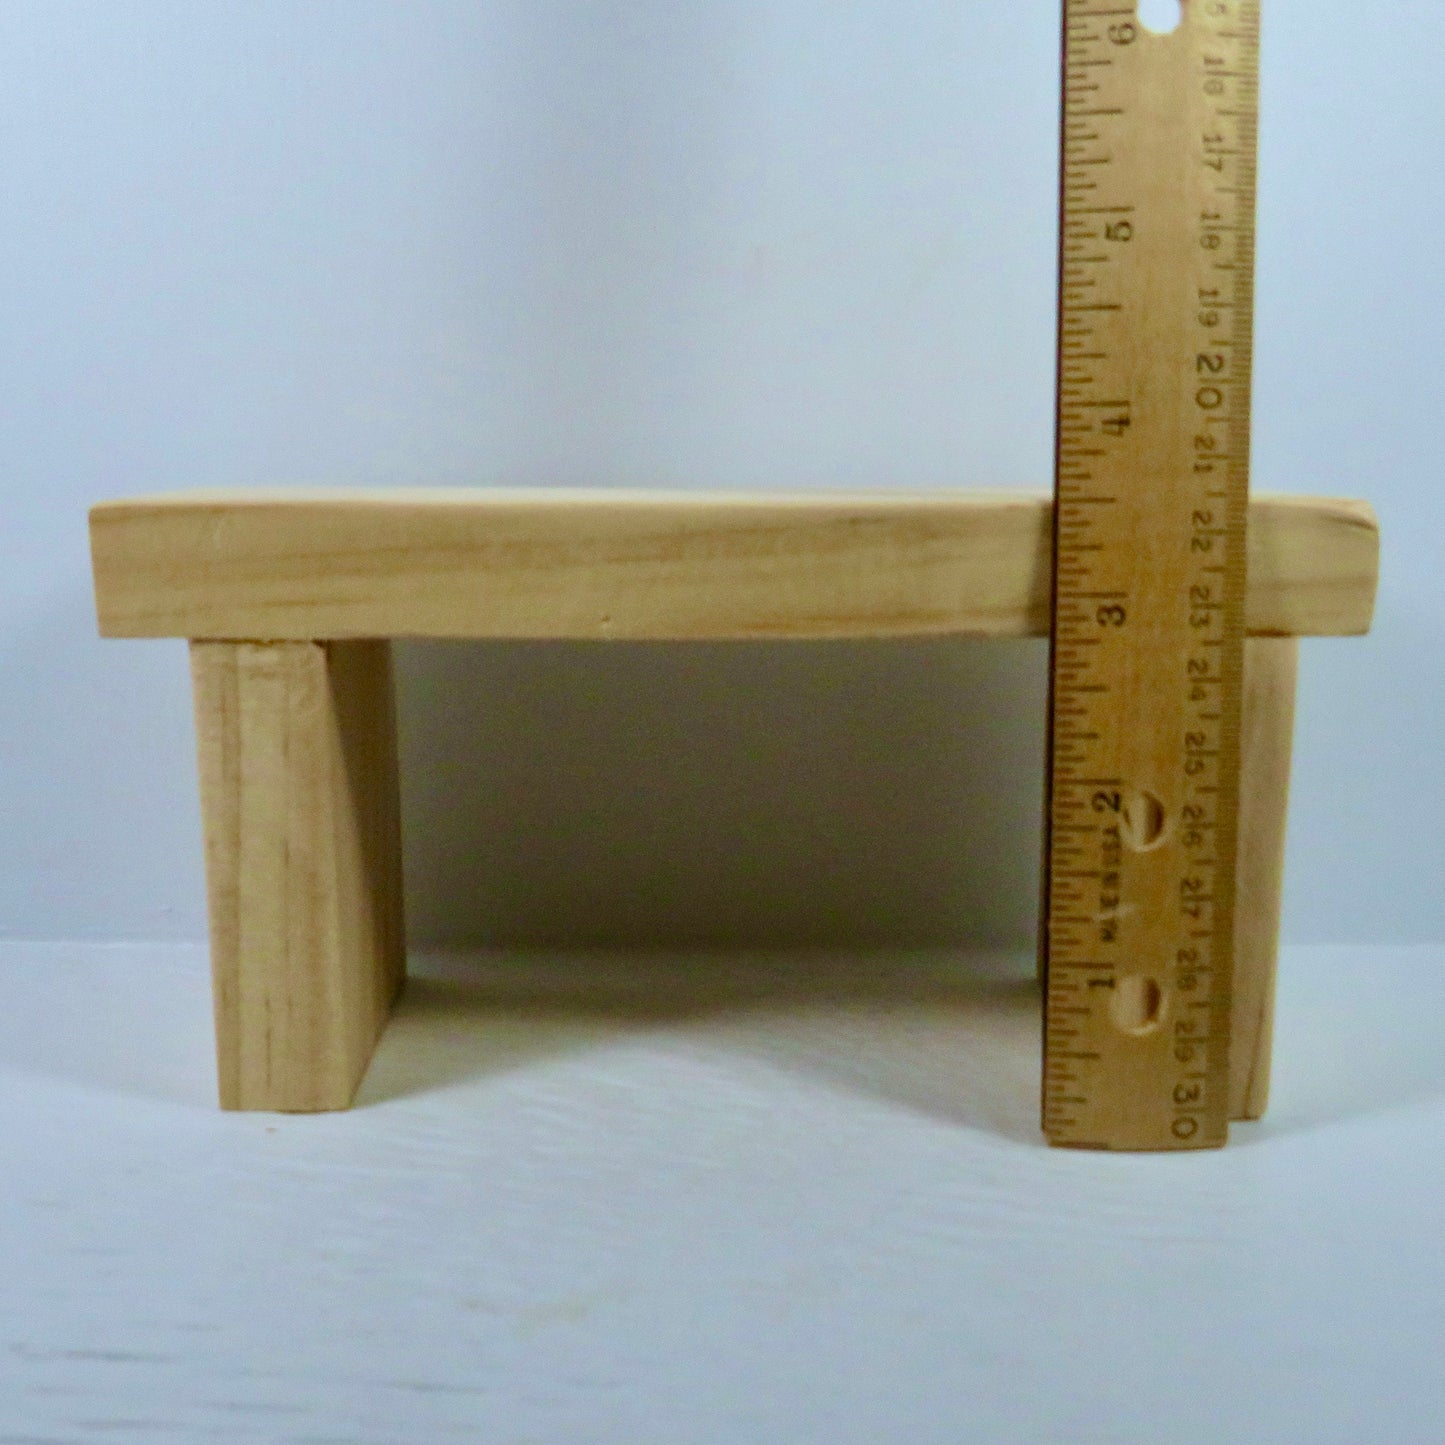 Wood Pedestal / Wood Display Bench / Display Bench / Wooden Pedestal